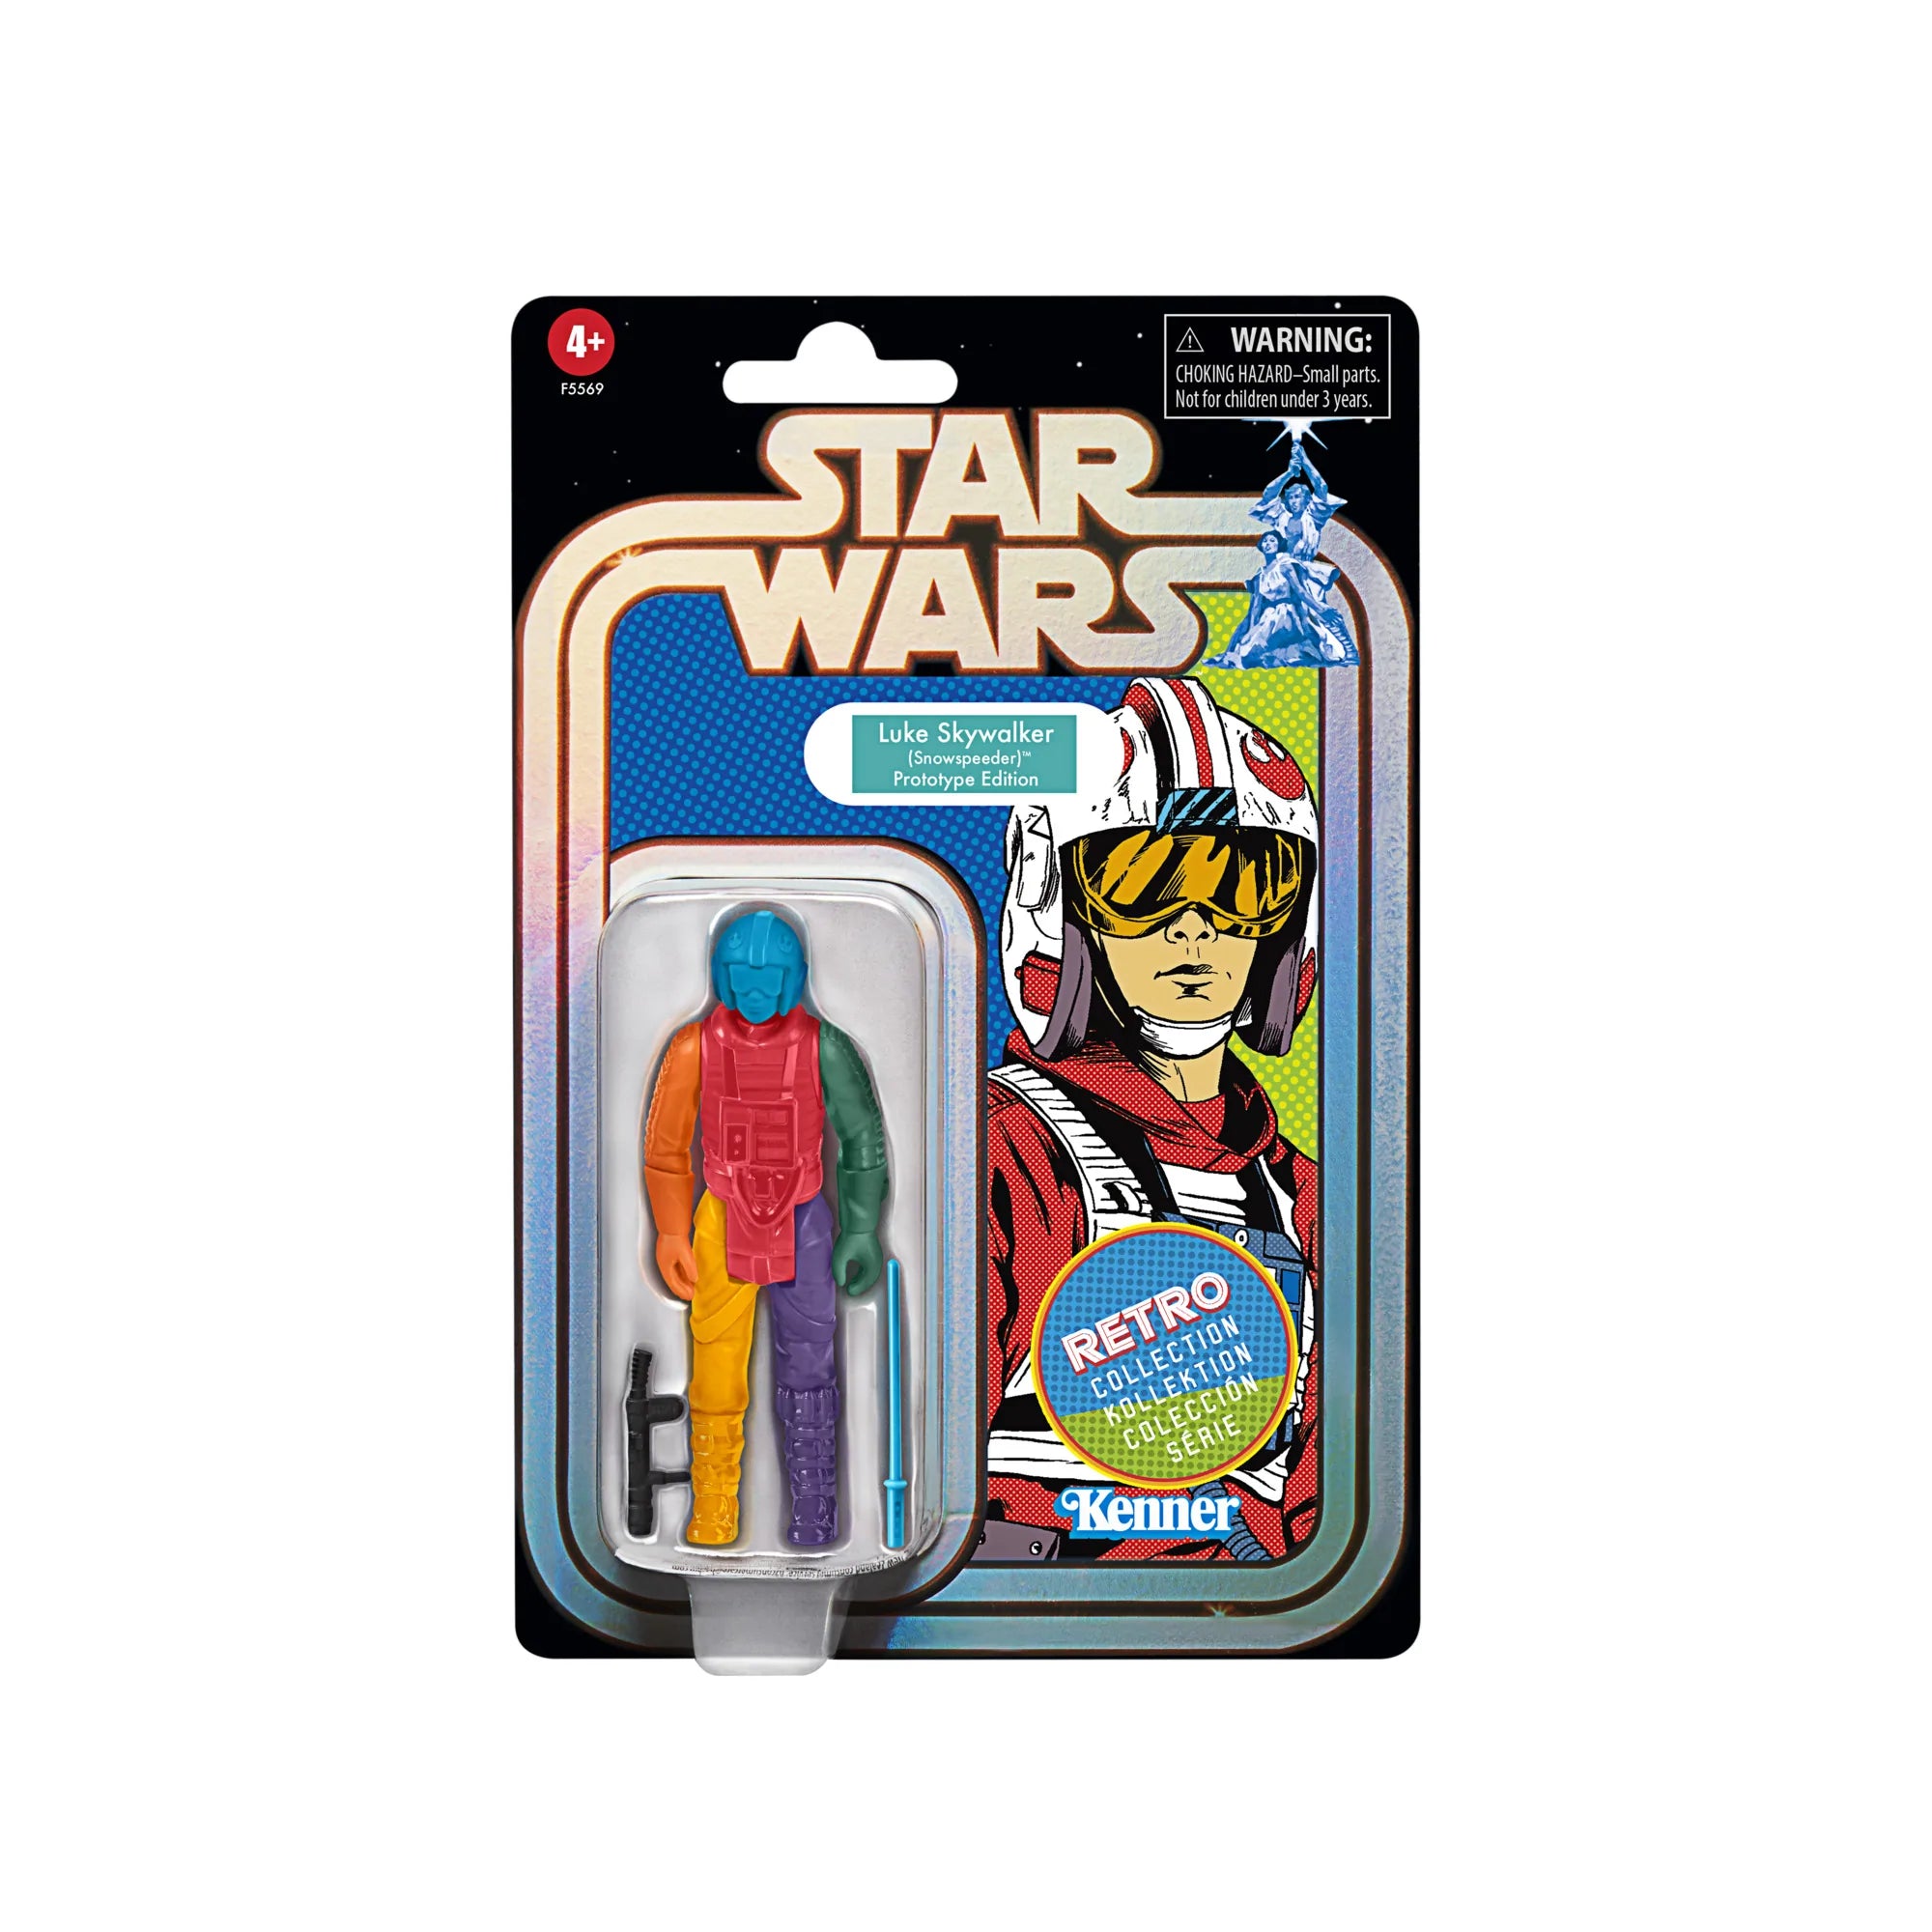 Hasbro - Star Wars Retro Collection - 3.75" Figure - Luke Skywalker (Snowspeeder) Prototype Edition (Carton of 8) - Marvelous Toys